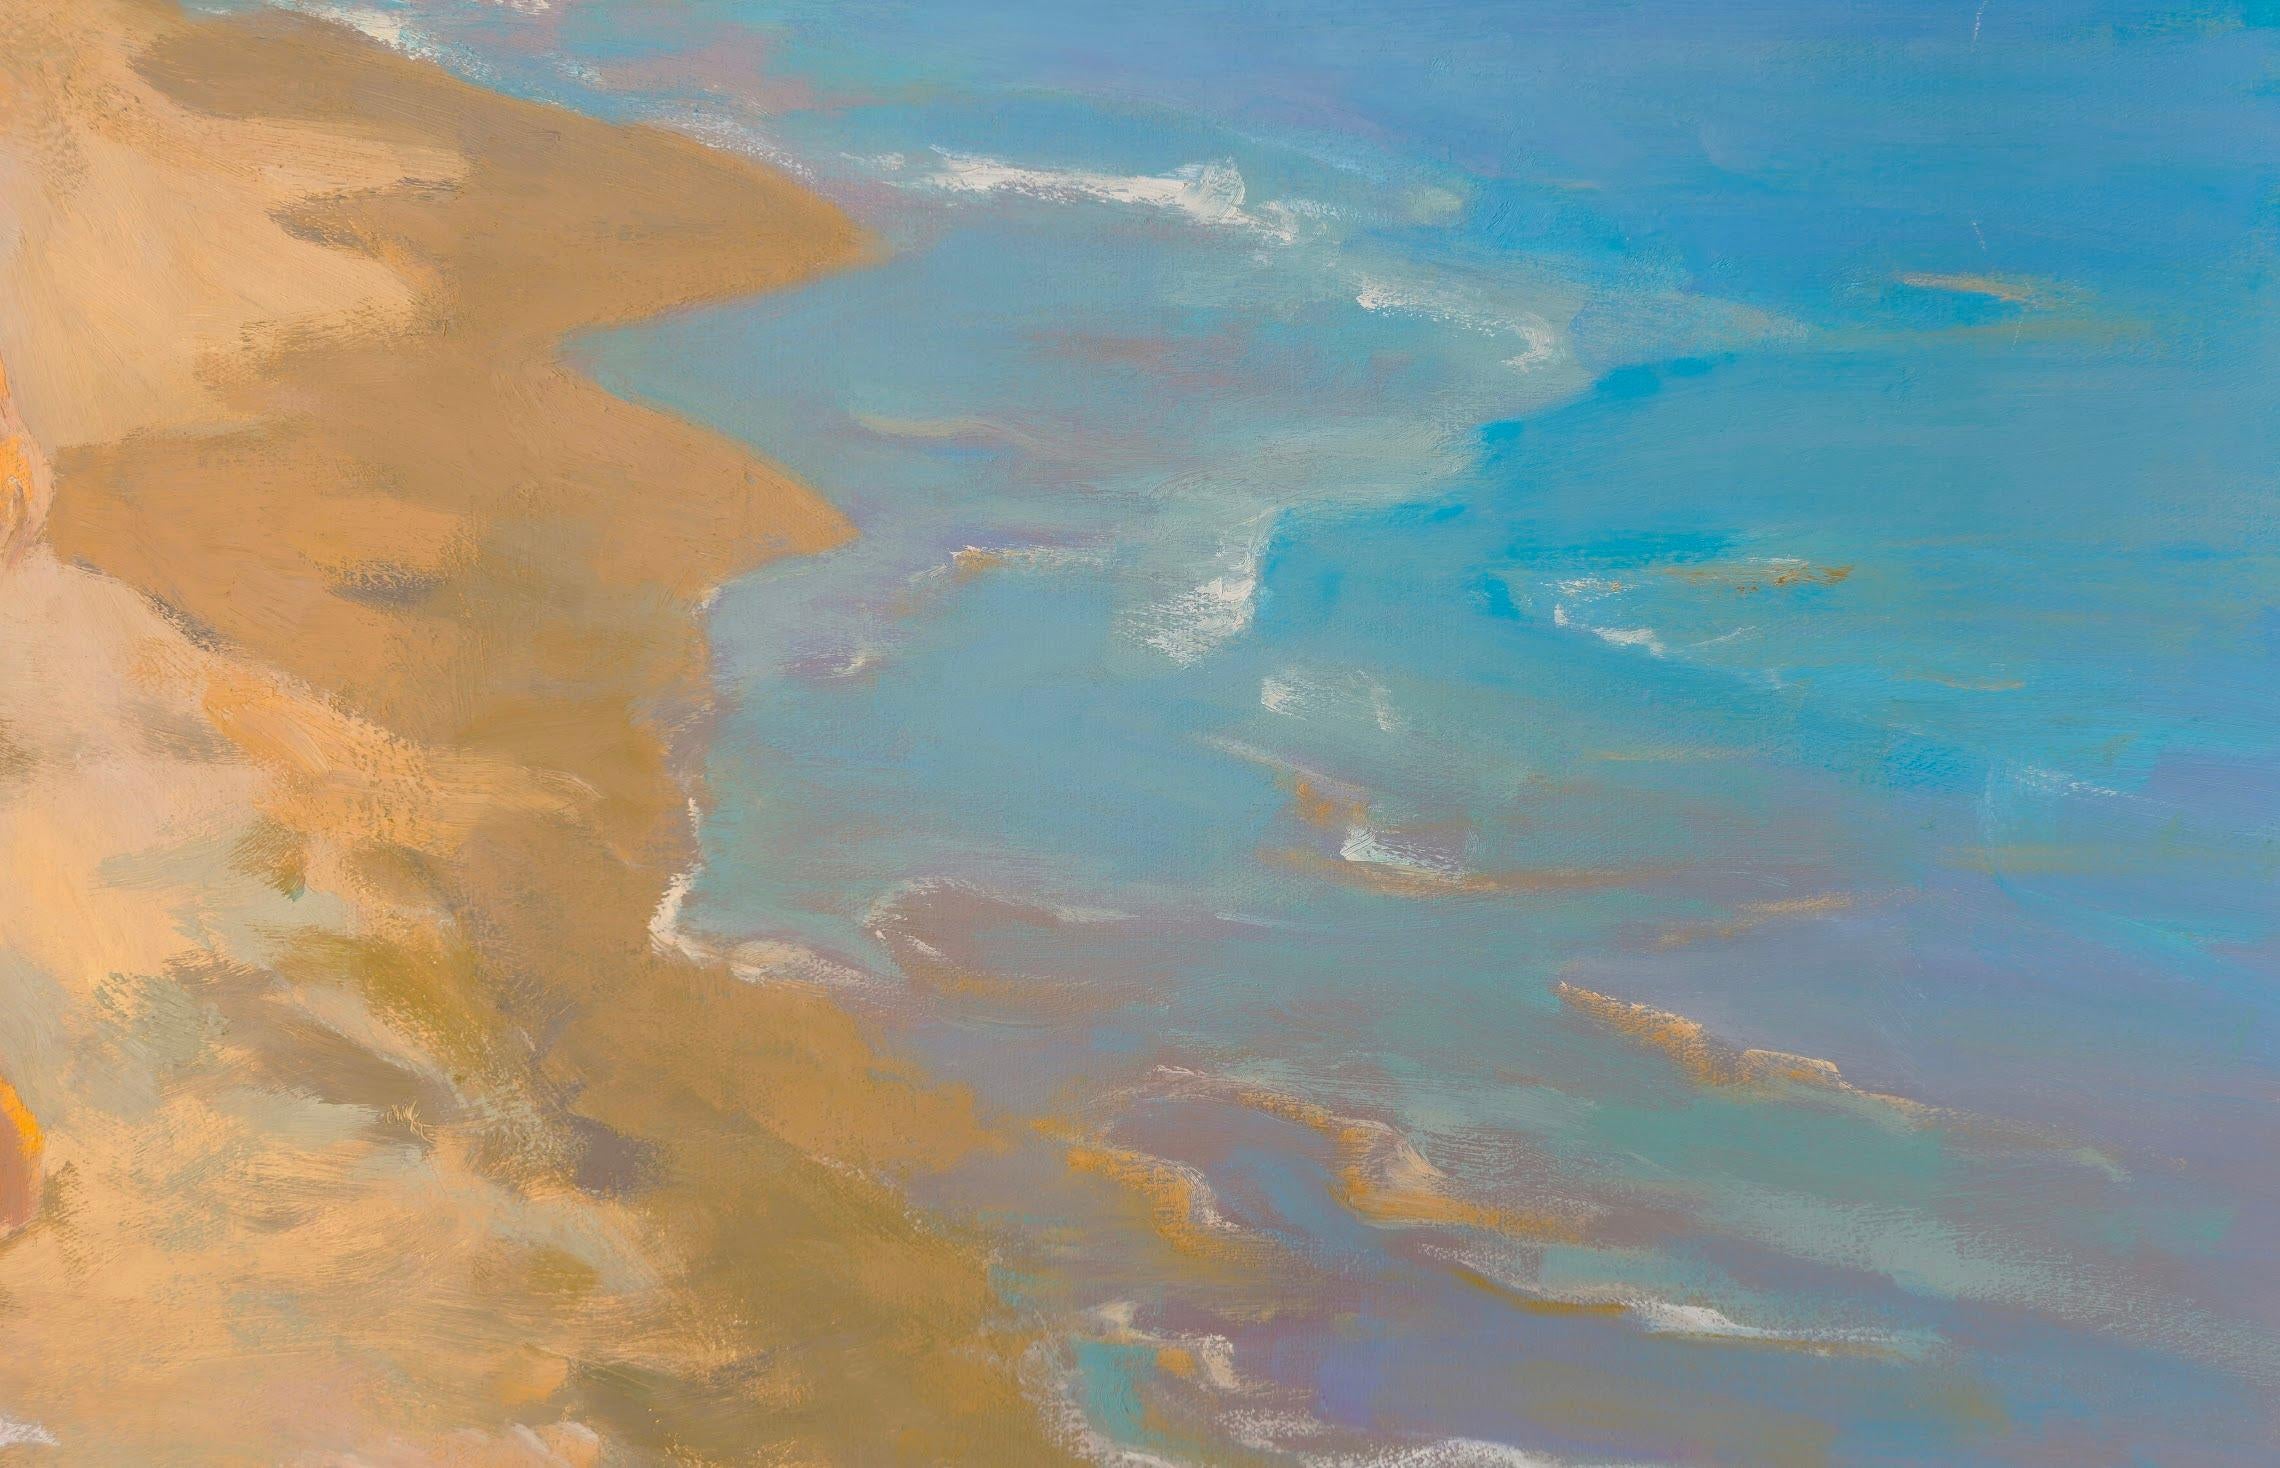 Artist: Ara H. Hakobyan
Work: Original Oil Painting, Handmade Artwork, One of a Kind
Medium: Oil on Canvas
Year: 2021
Style: Impressionism
Title: On the Beach
Size: 31.5